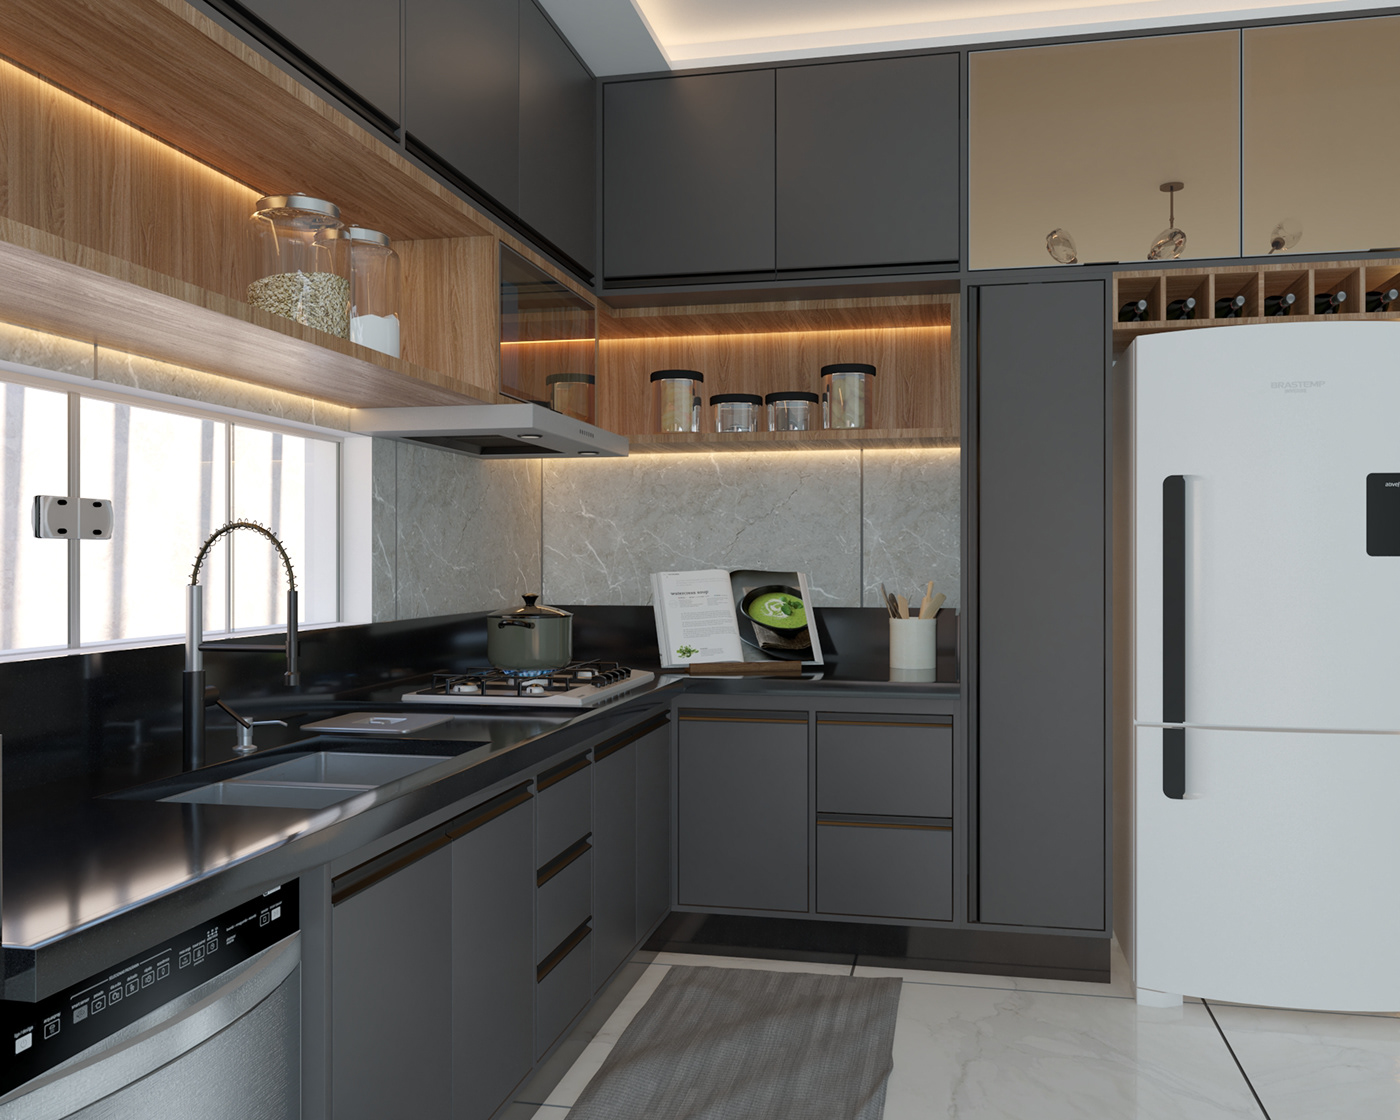 kitchen cozinha Cozinha Planejada interior design  Render vray architecture 3D rendering arauco